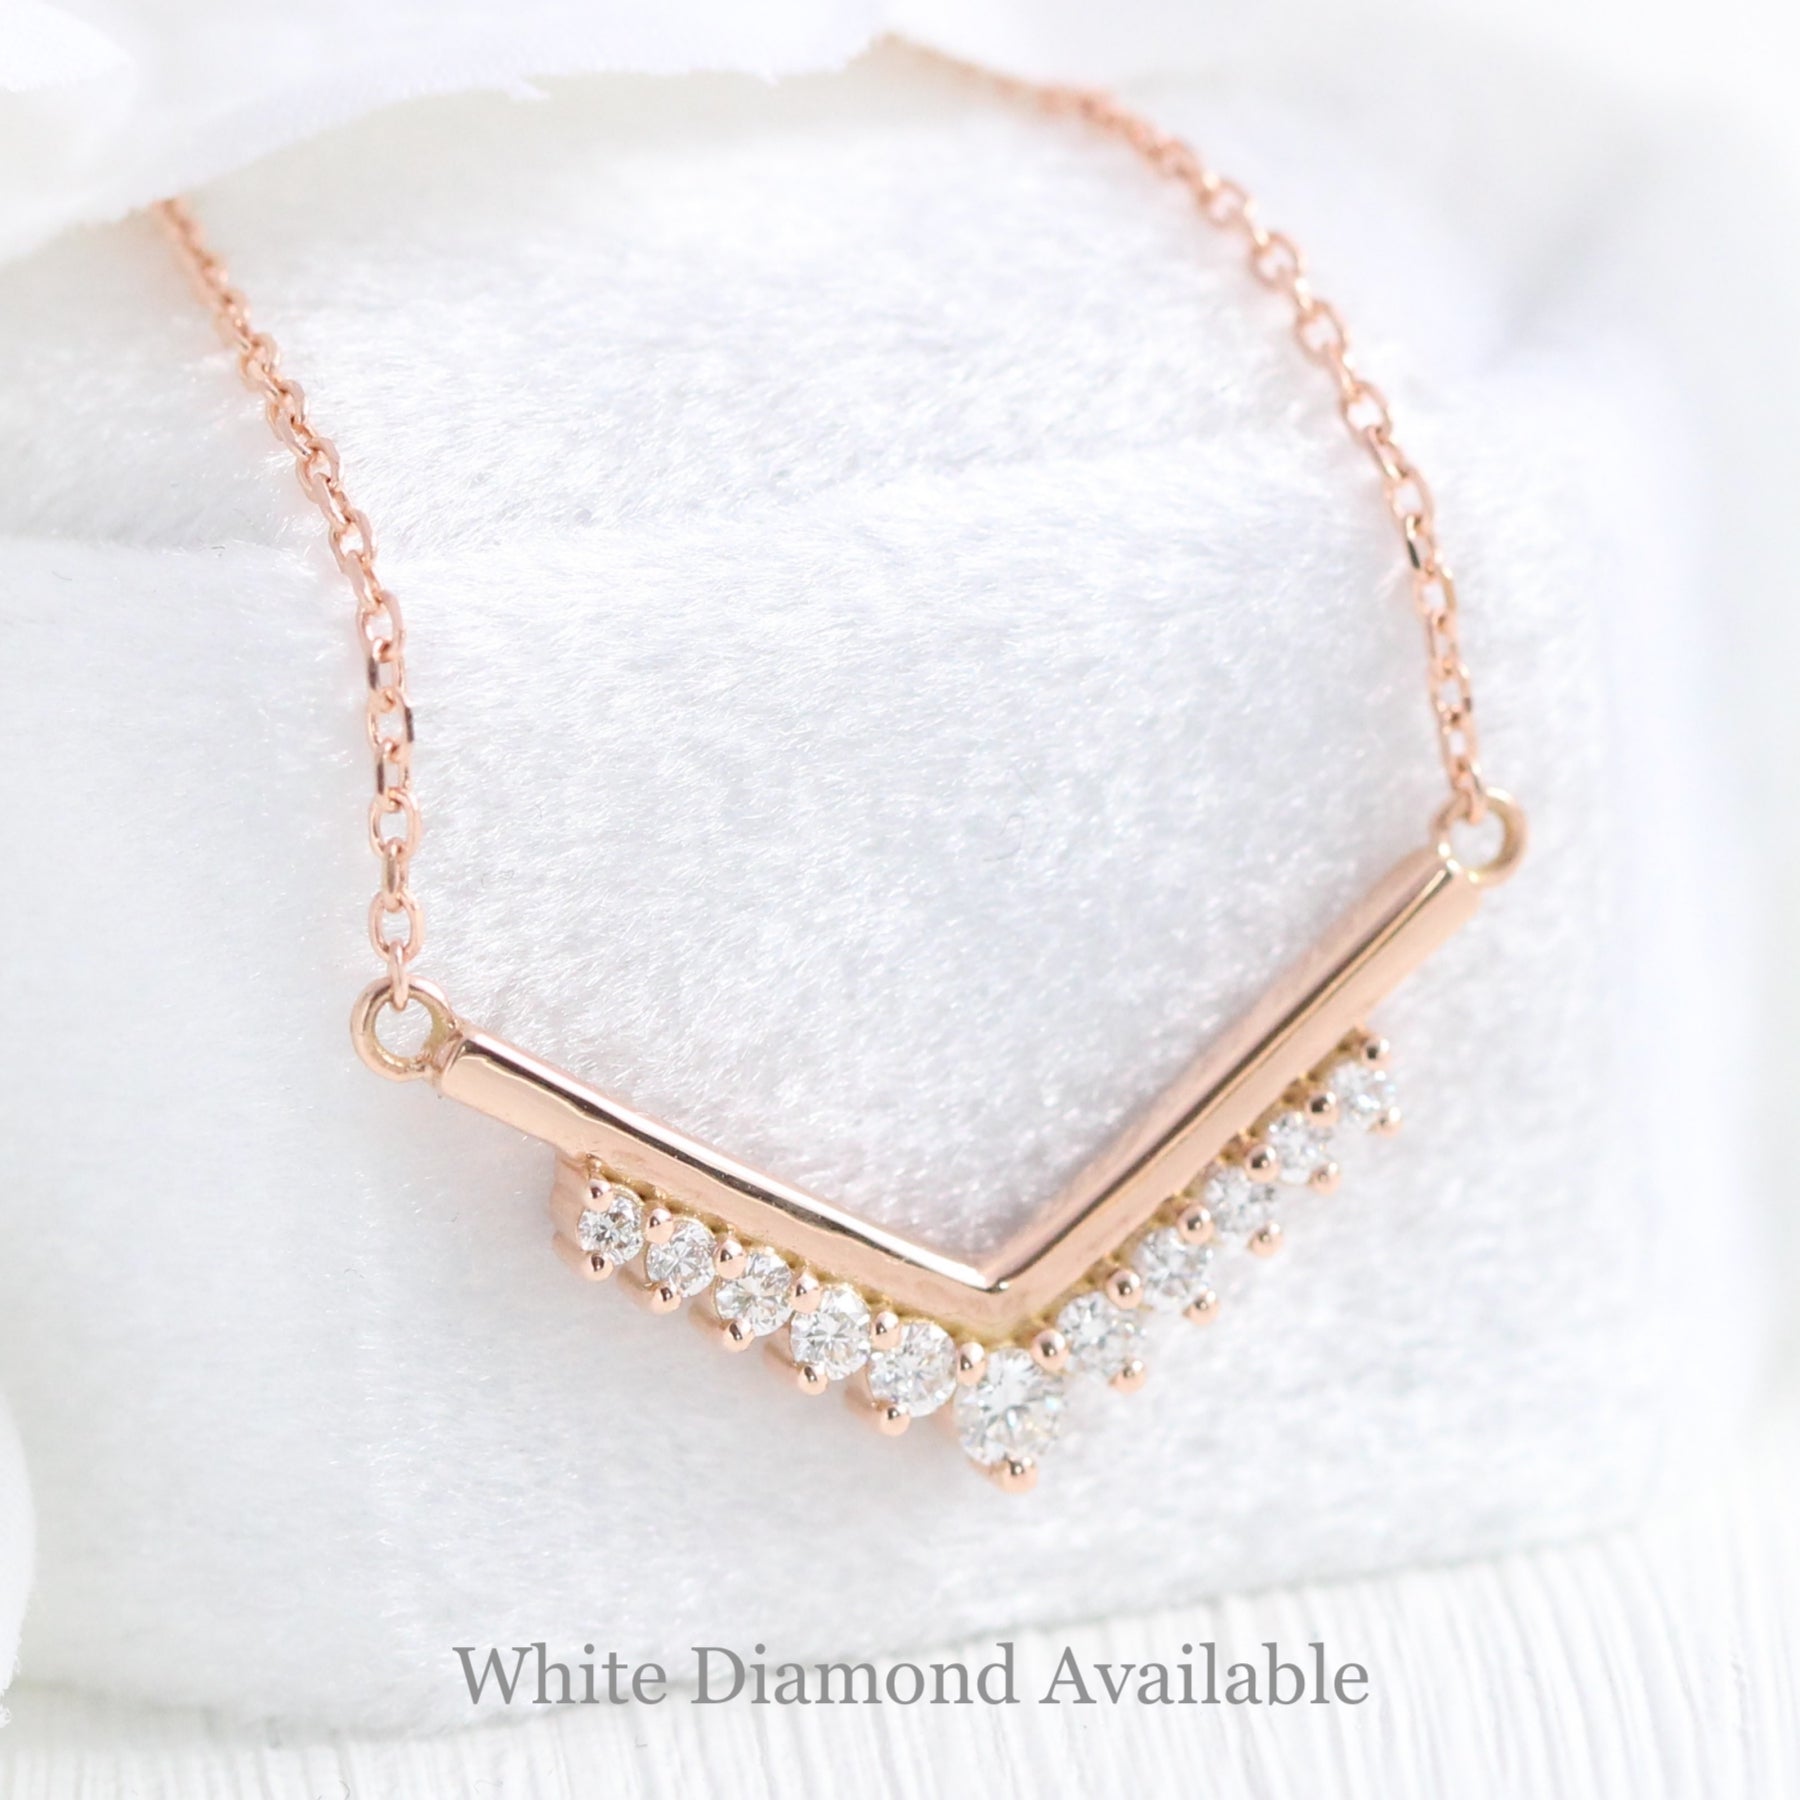 Tiara diamond necklace rose gold V shaped pendant la more design jewelry